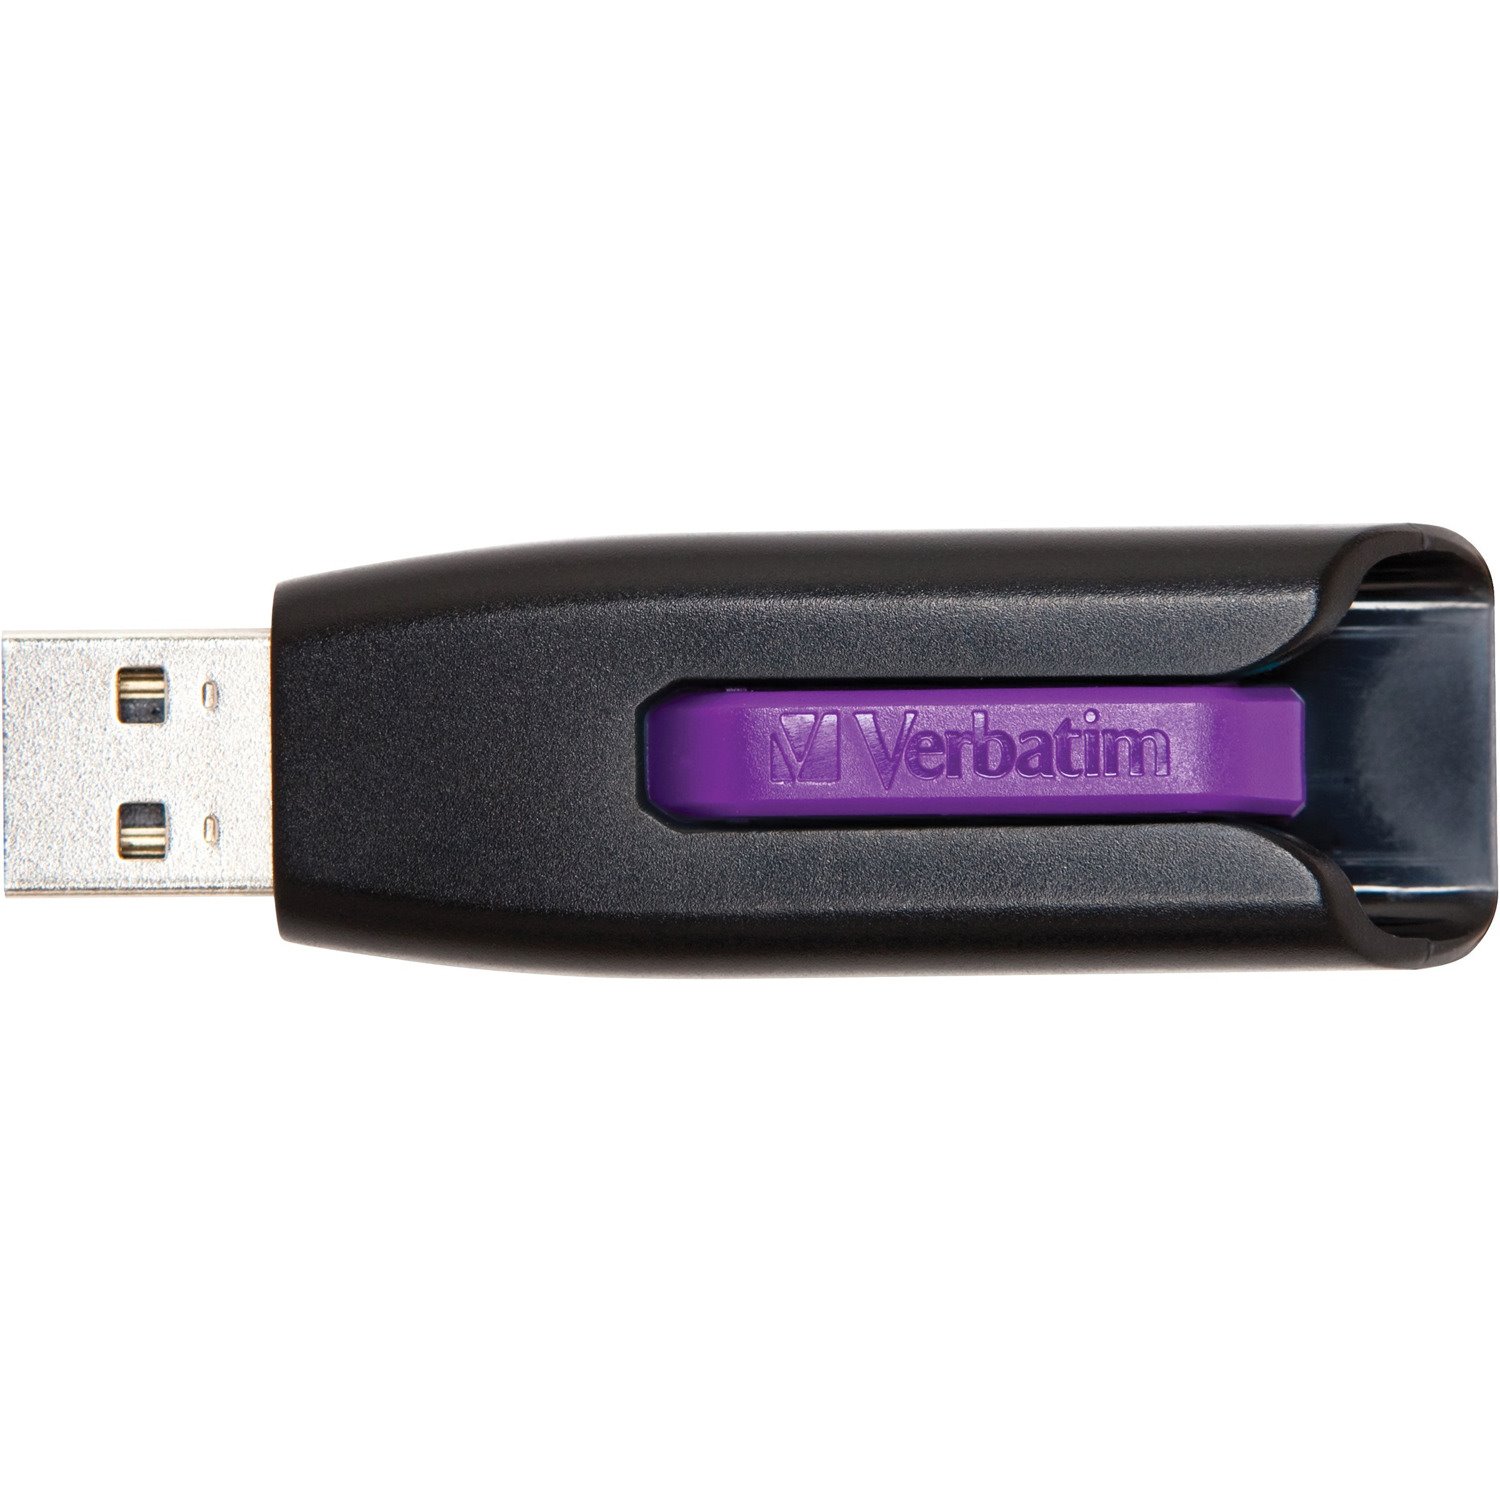 Verbatim Store 'n' Go V3 16 GB USB 3.0 Flash Drive - Purple